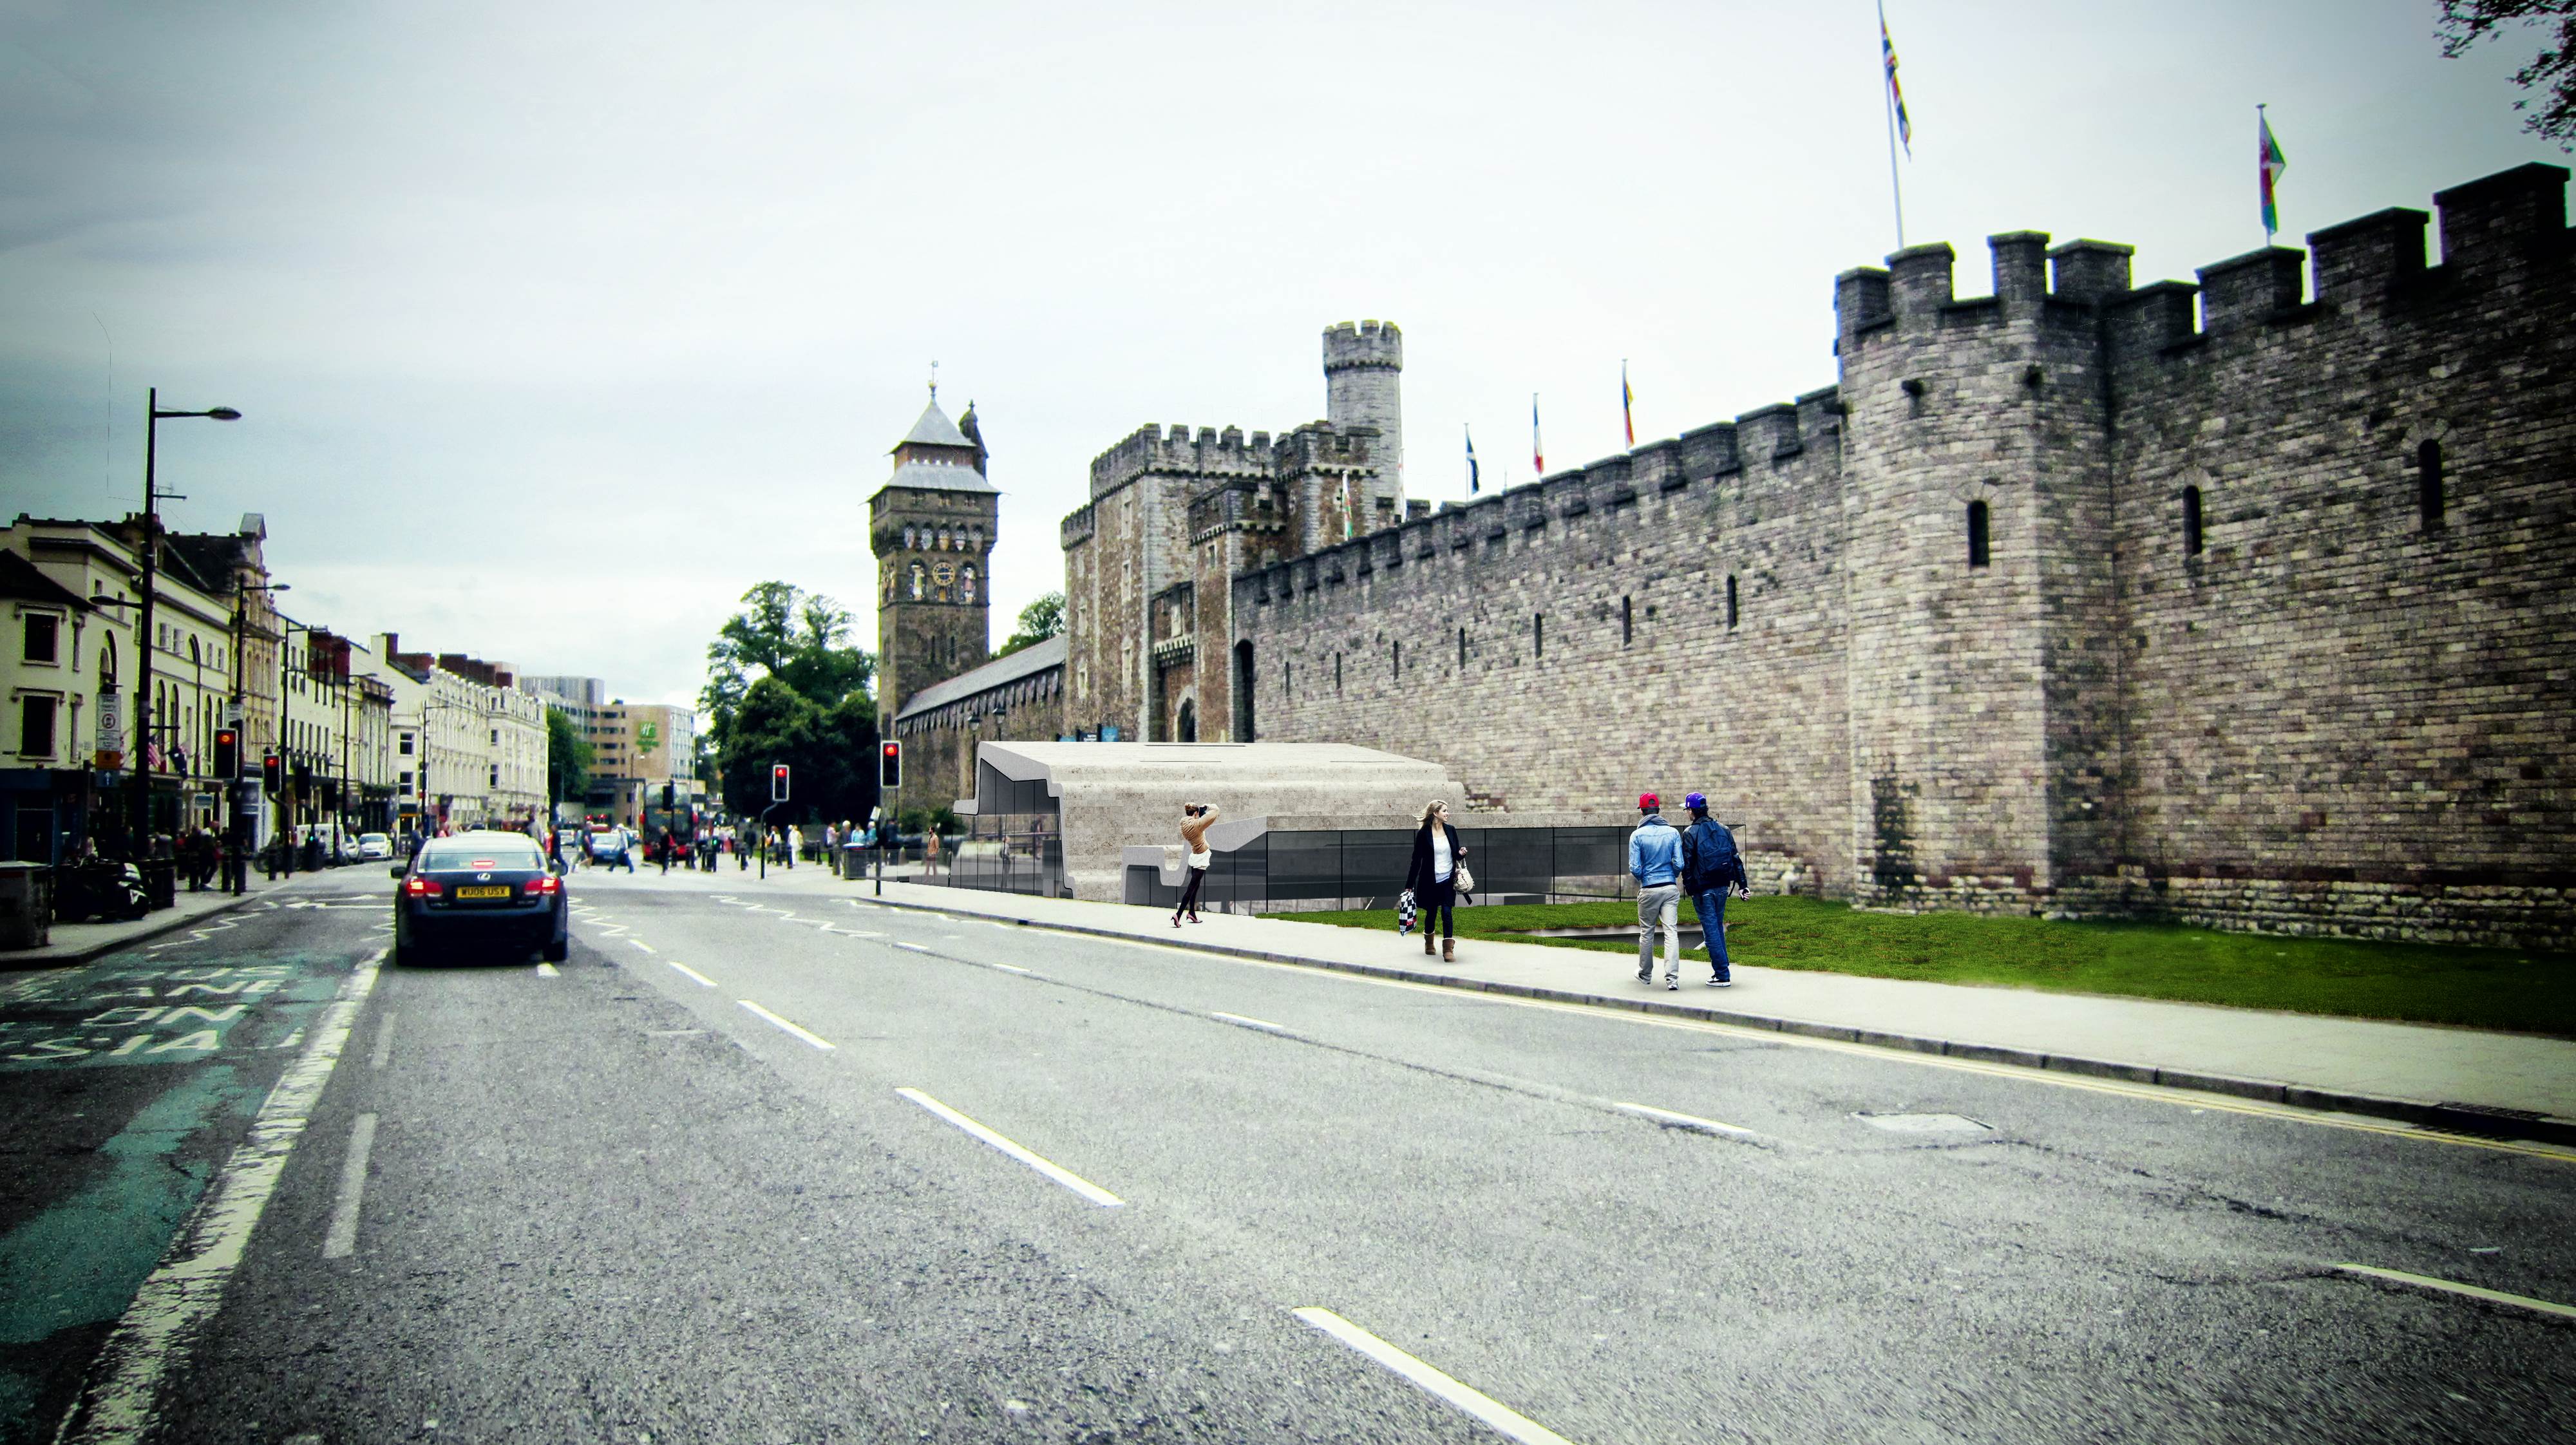 Cardiff Castle in the City Centre